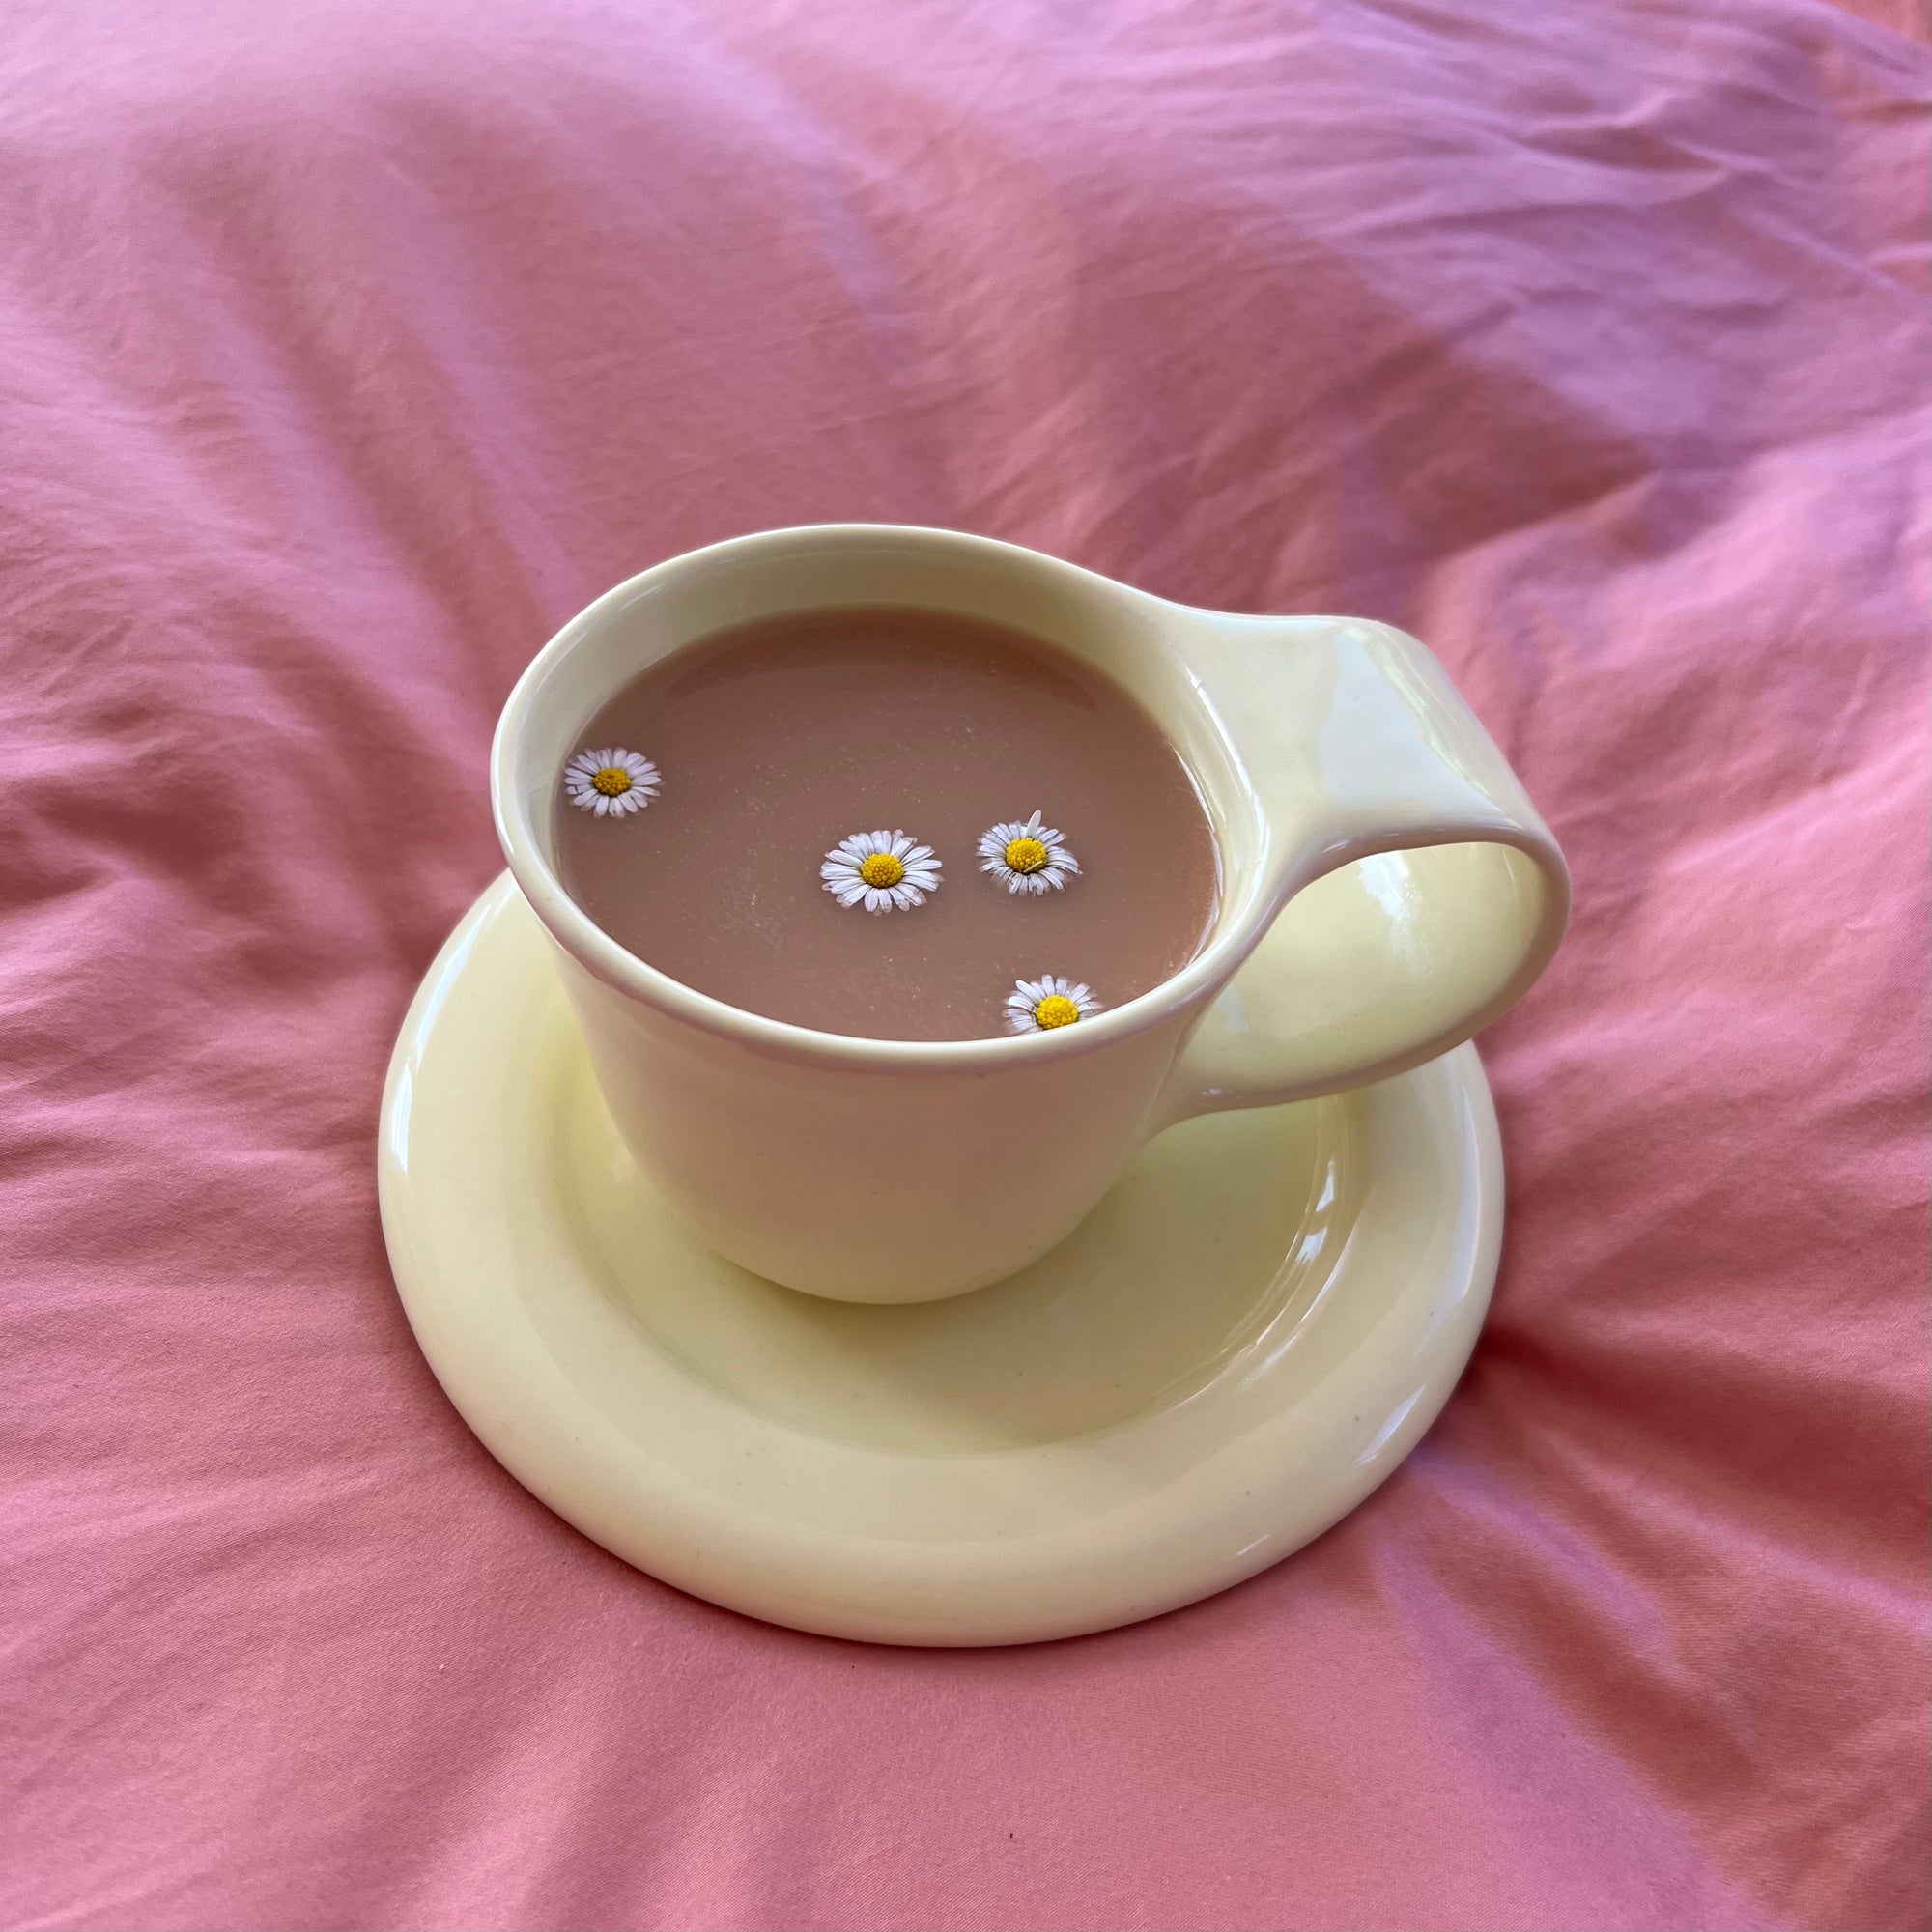 Rosetta tea / coffee set